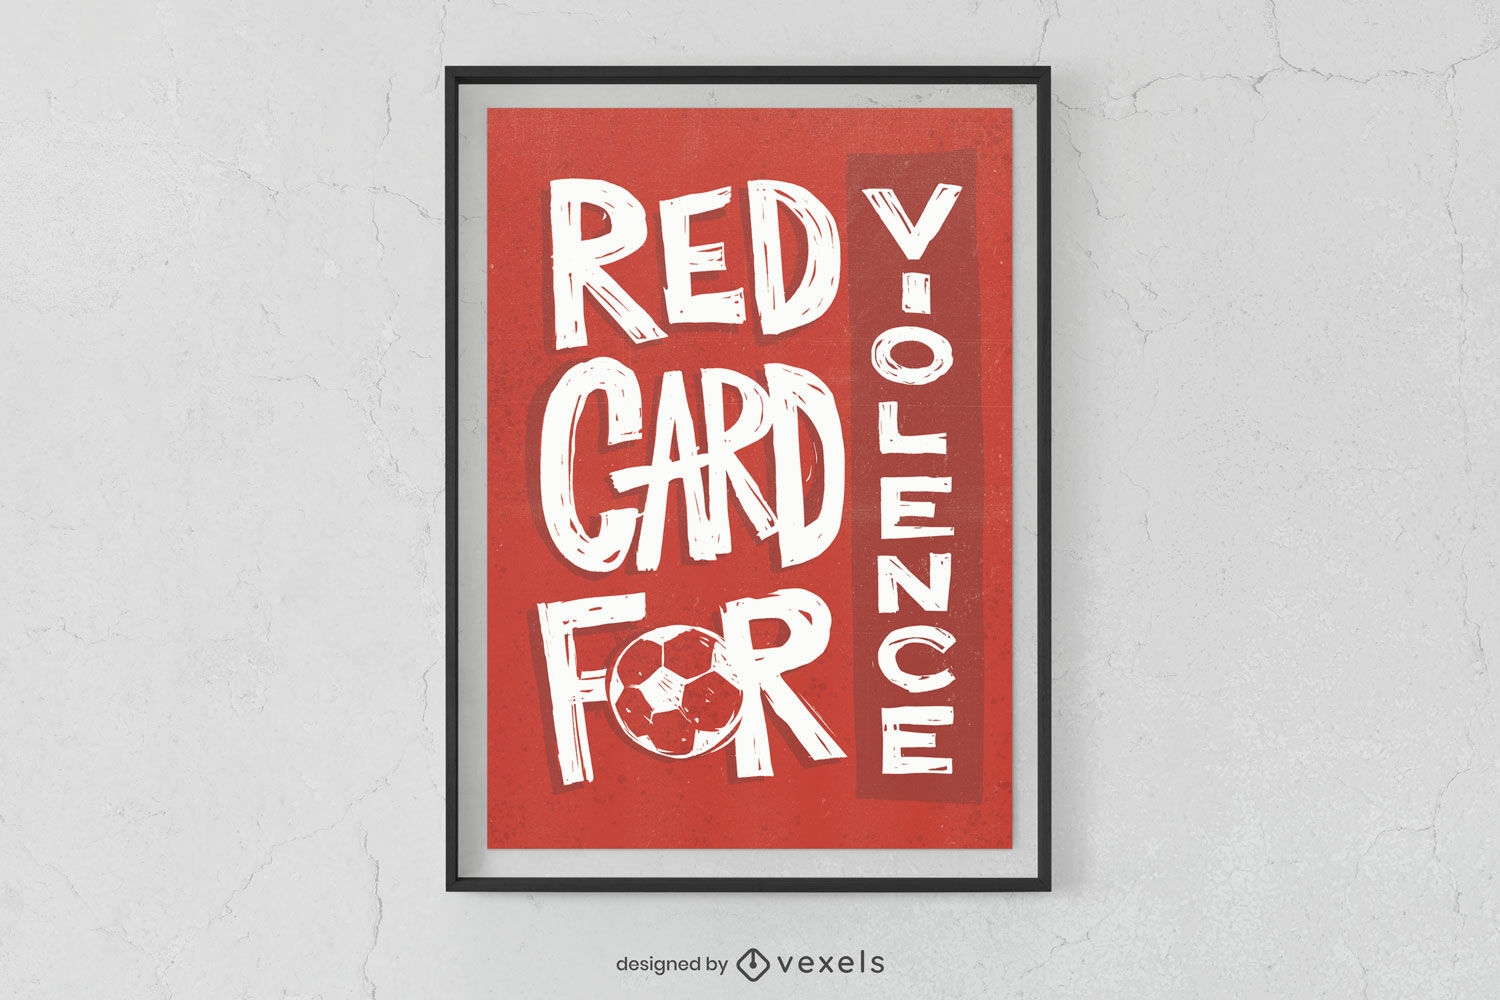 Red card soccer match sport poster design